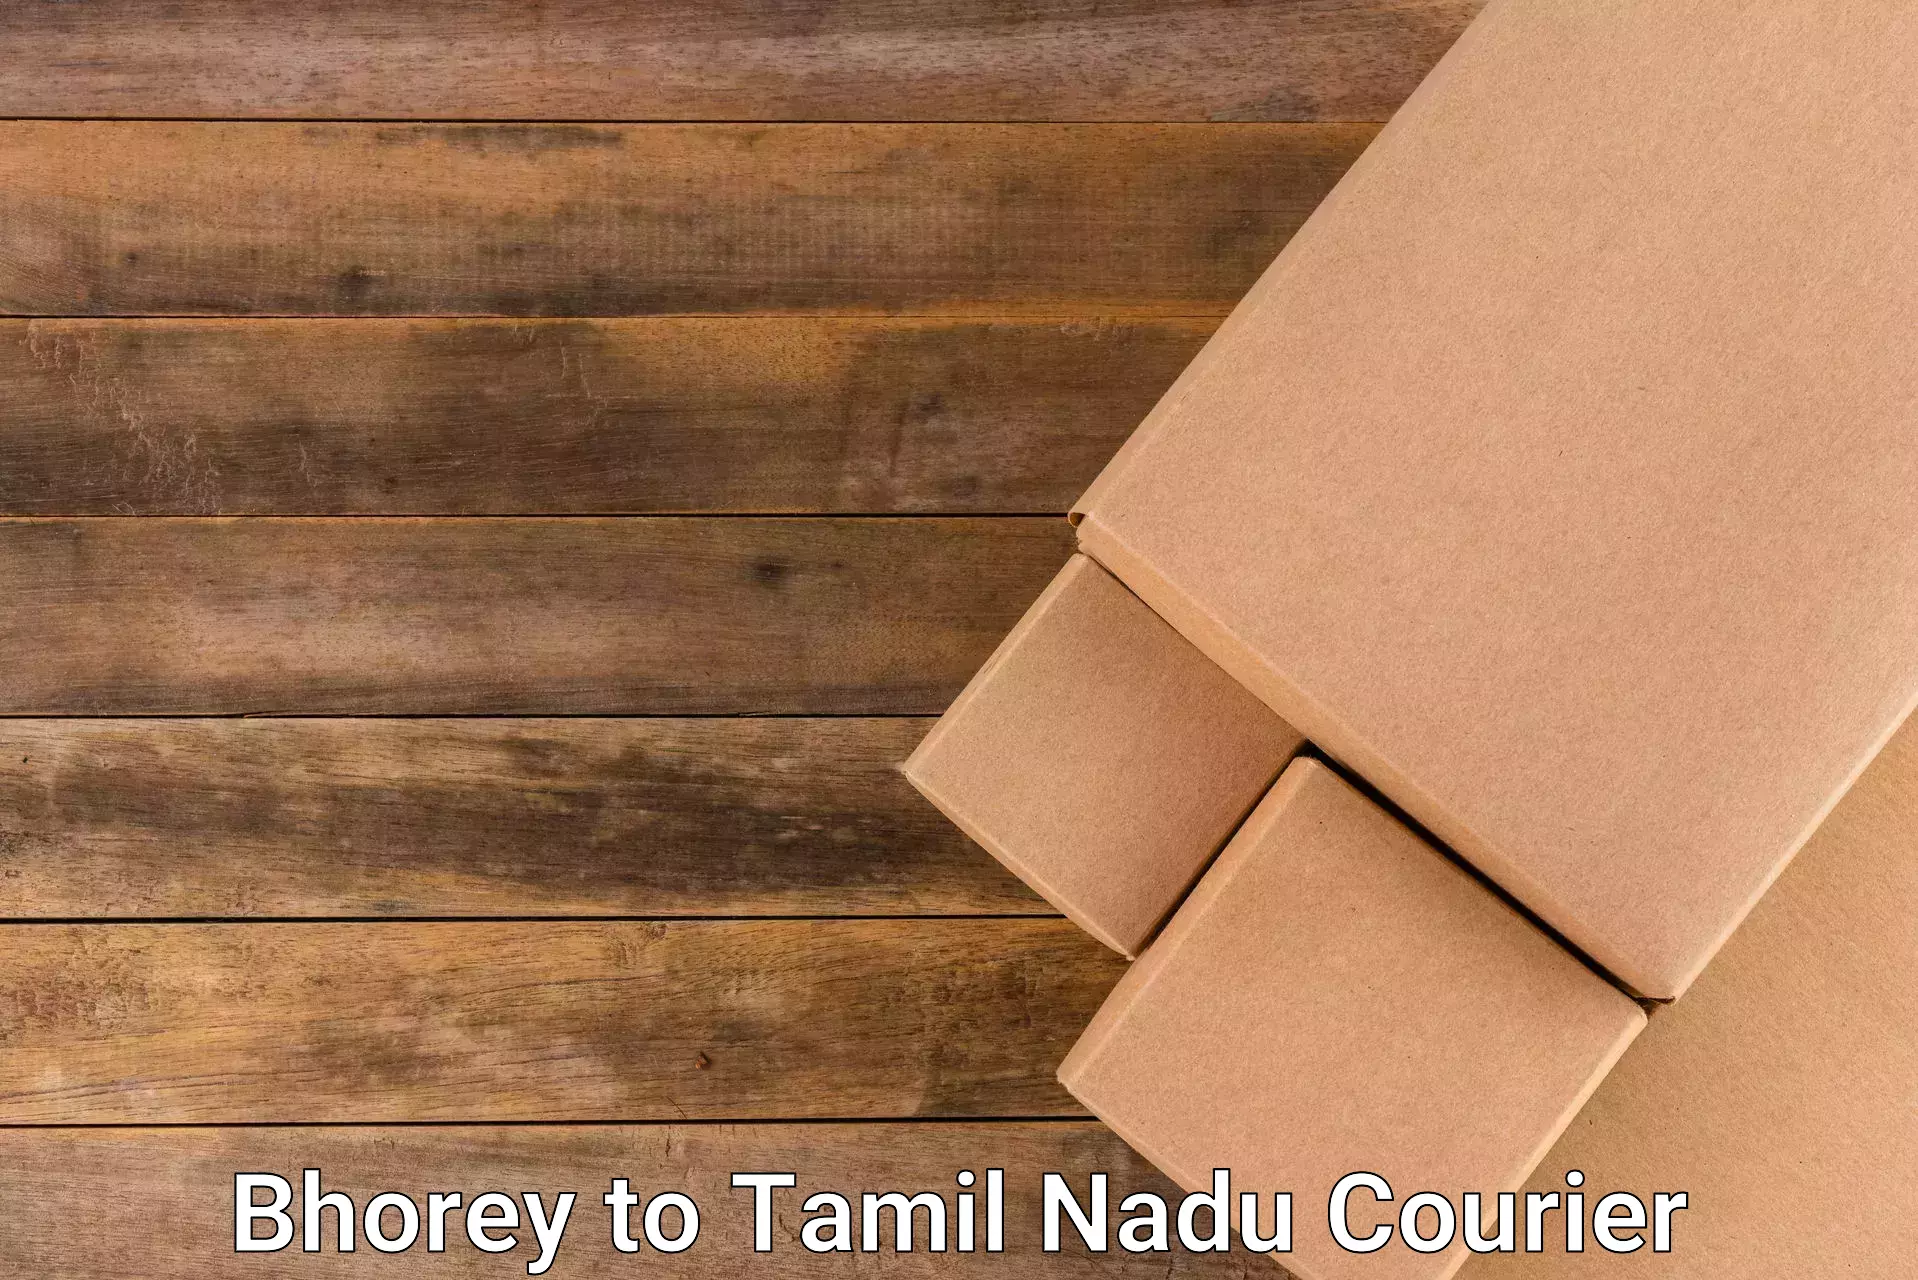 Secure package delivery in Bhorey to Tamil Nadu